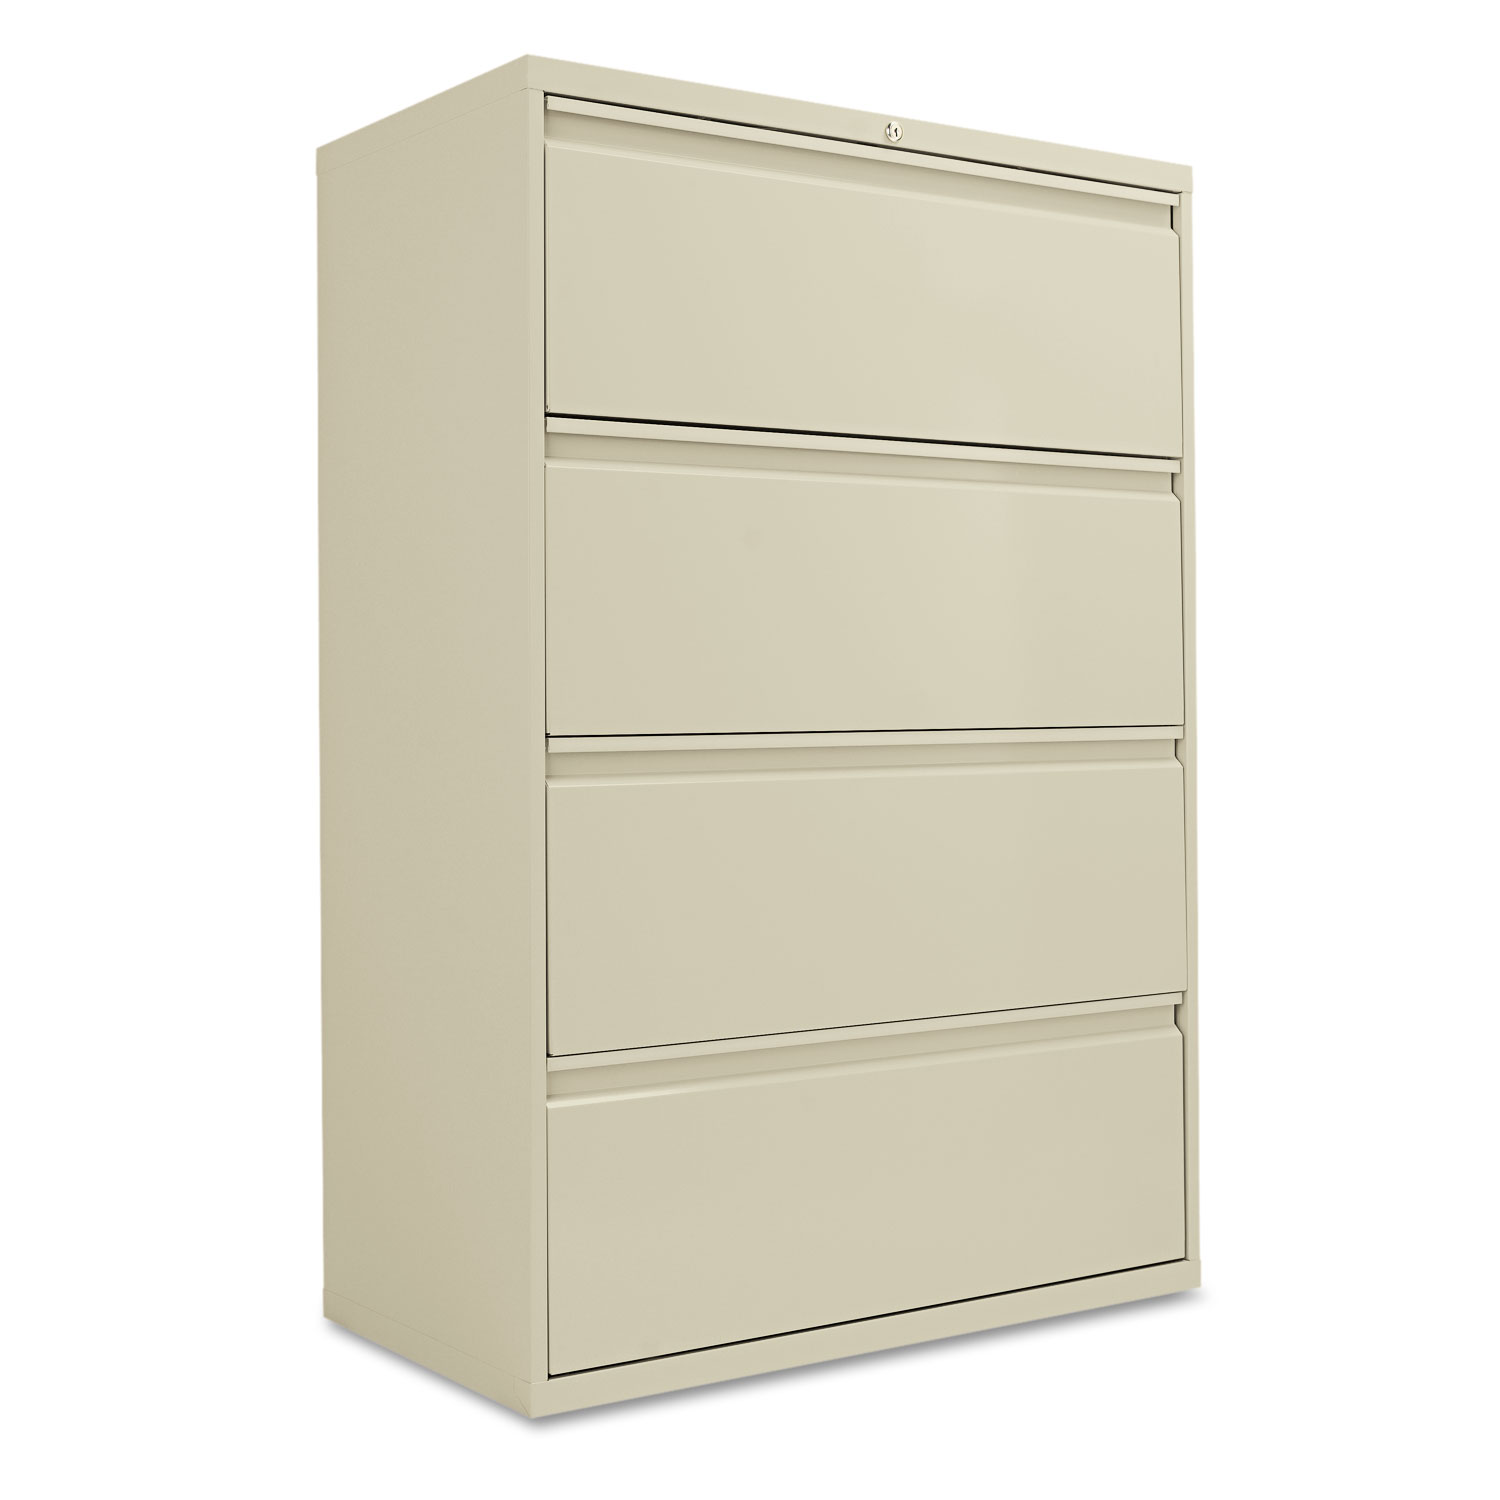  Alera ALELF3654PY Four-Drawer Lateral File Cabinet, 36w x 18d x 52.5h, Putty (ALELF3654PY) 